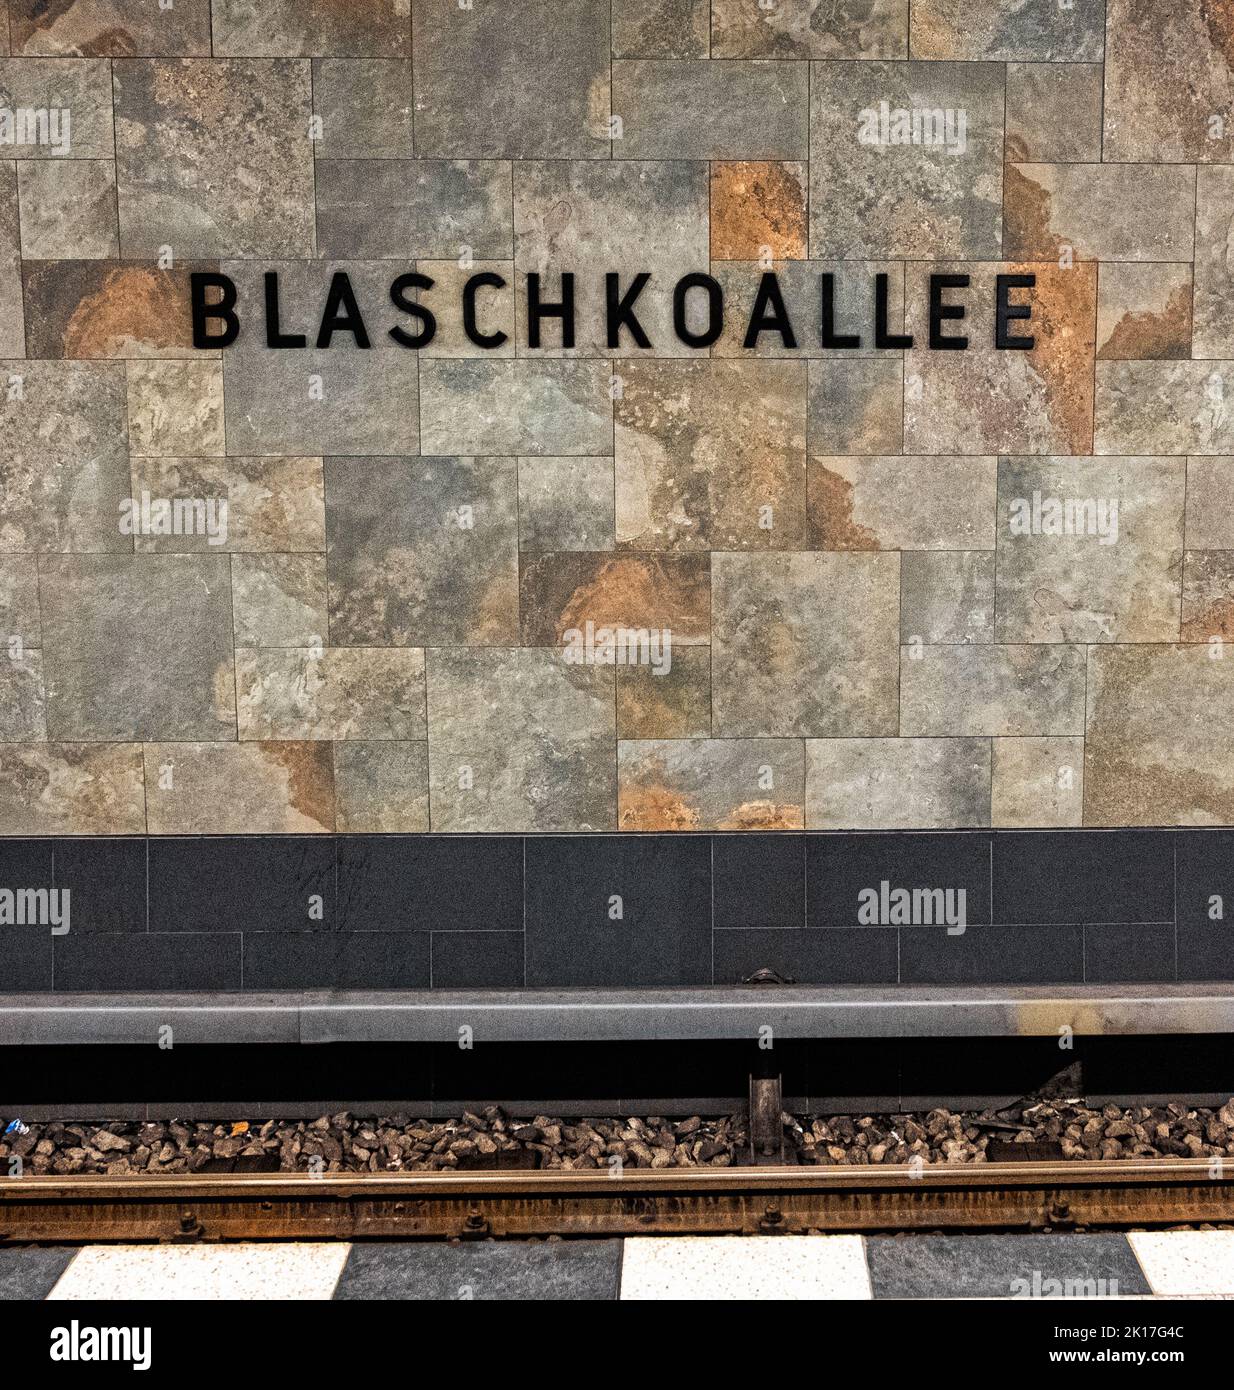 Blaschkoallee Underground U-bahn railway station serves the U7 Line, Britz, Neukölln, Berlin. Interior with large tiles and photograph Stock Photo